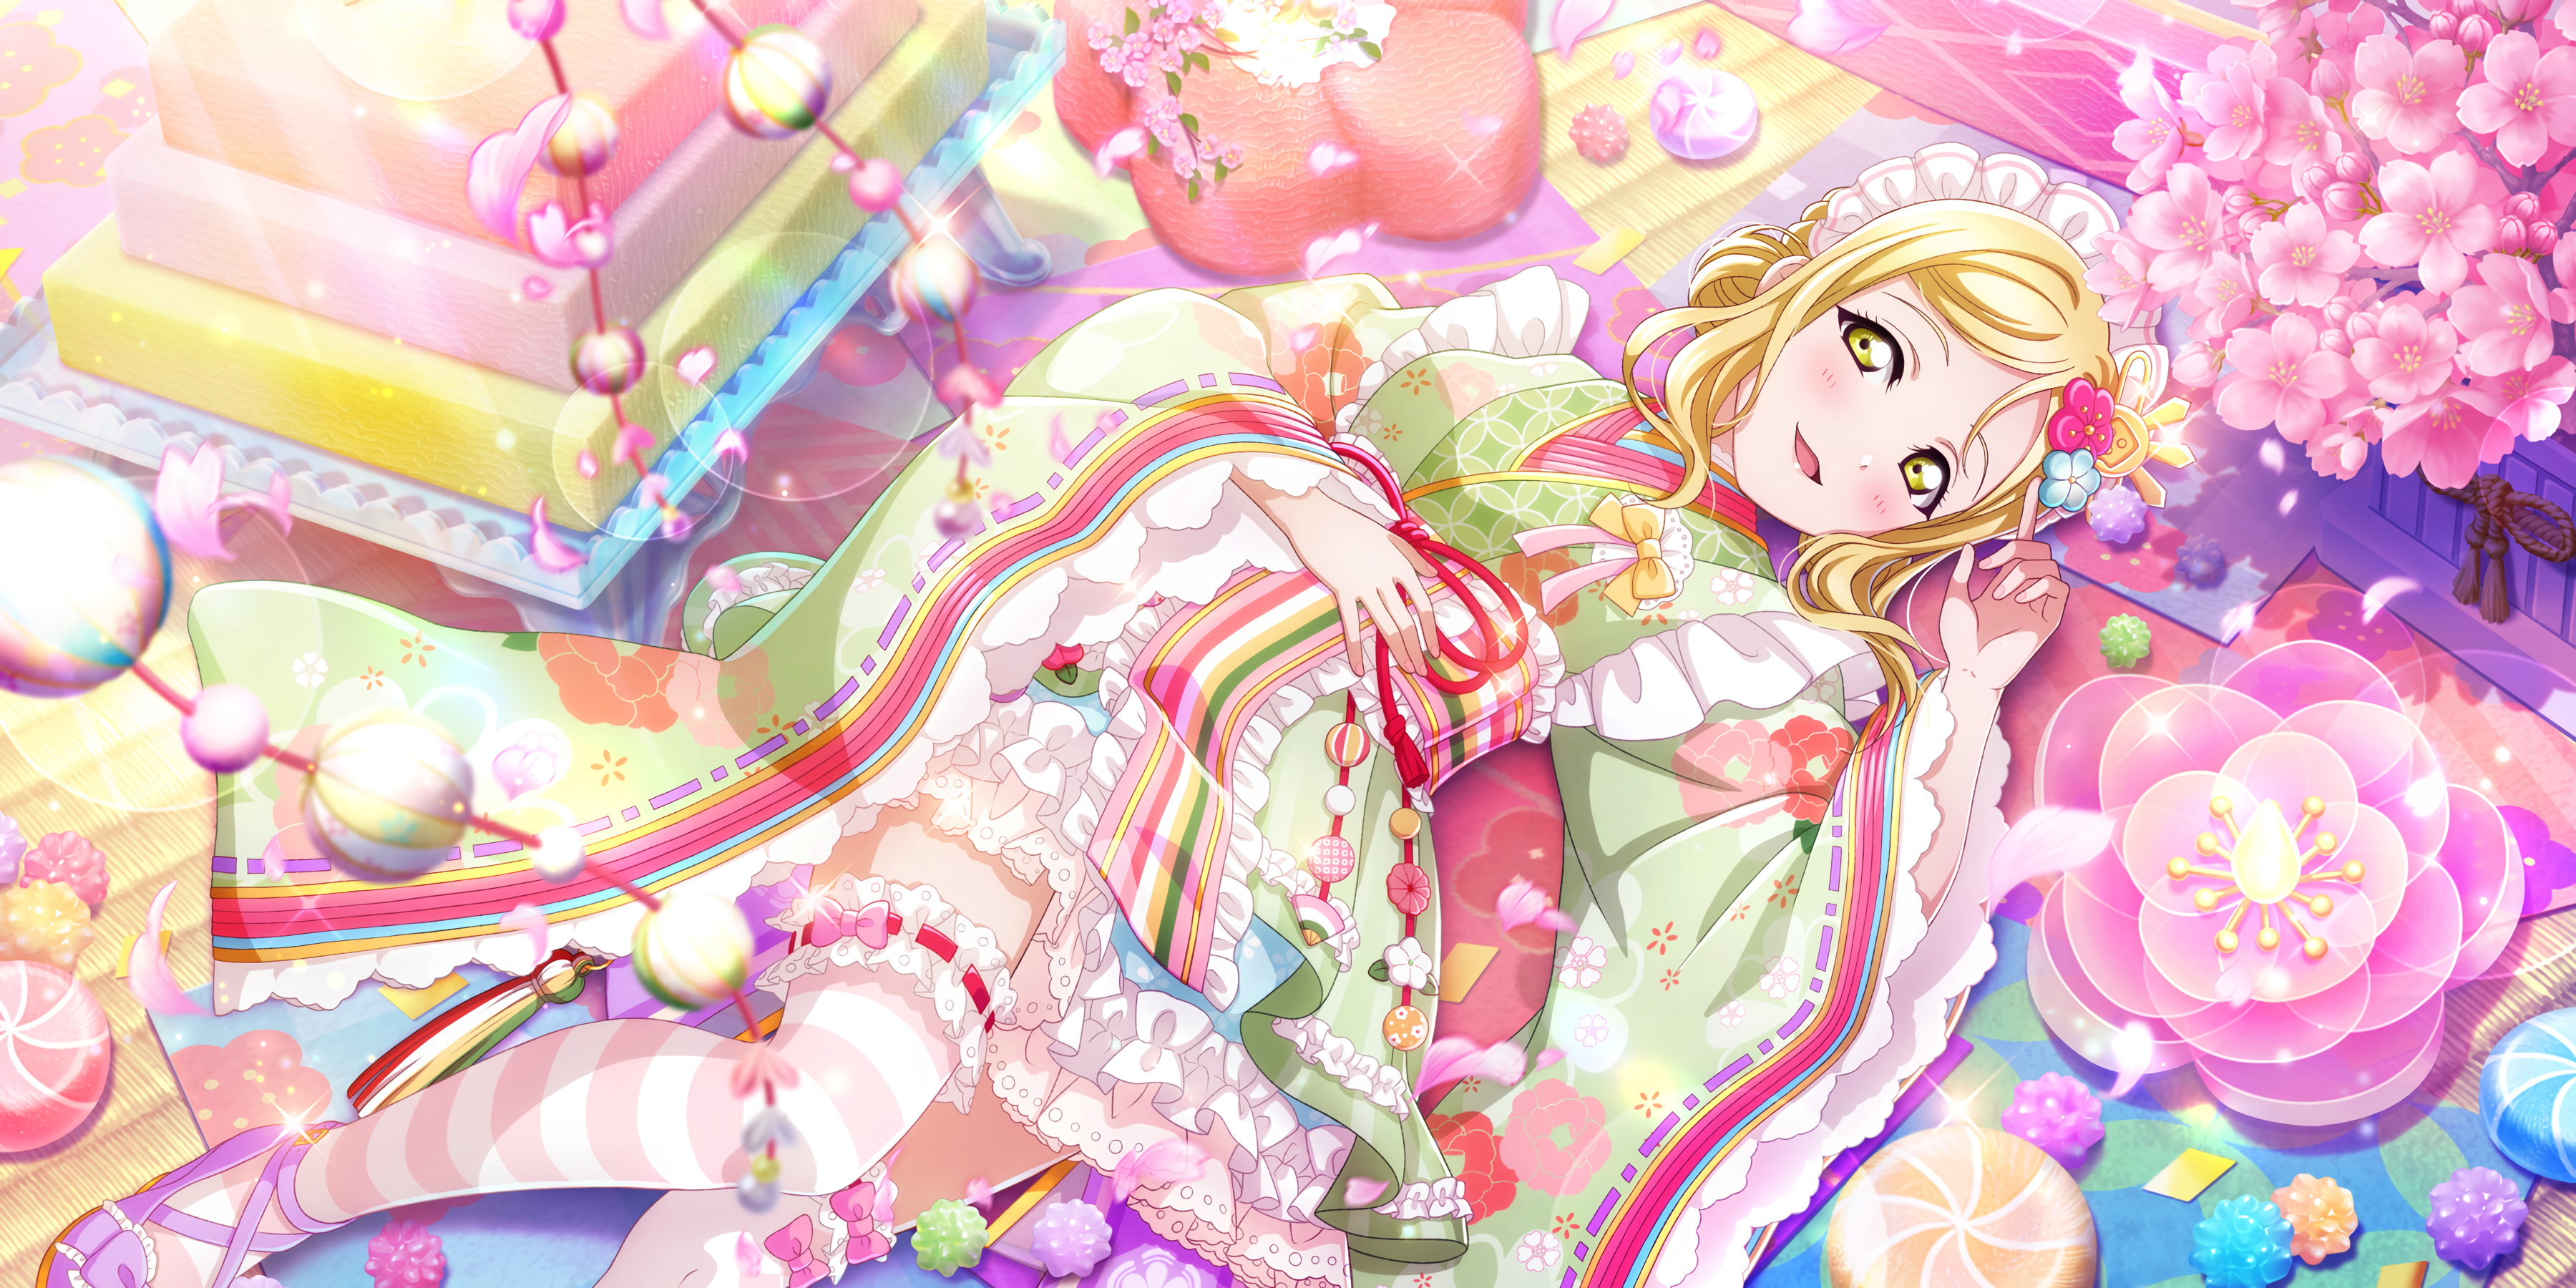 Anime 3600x1800 Ohara Mari Love Live! Sunshine Love Live! anime anime girls lying on back blushing flower in hair petals dress flowers stars stockings